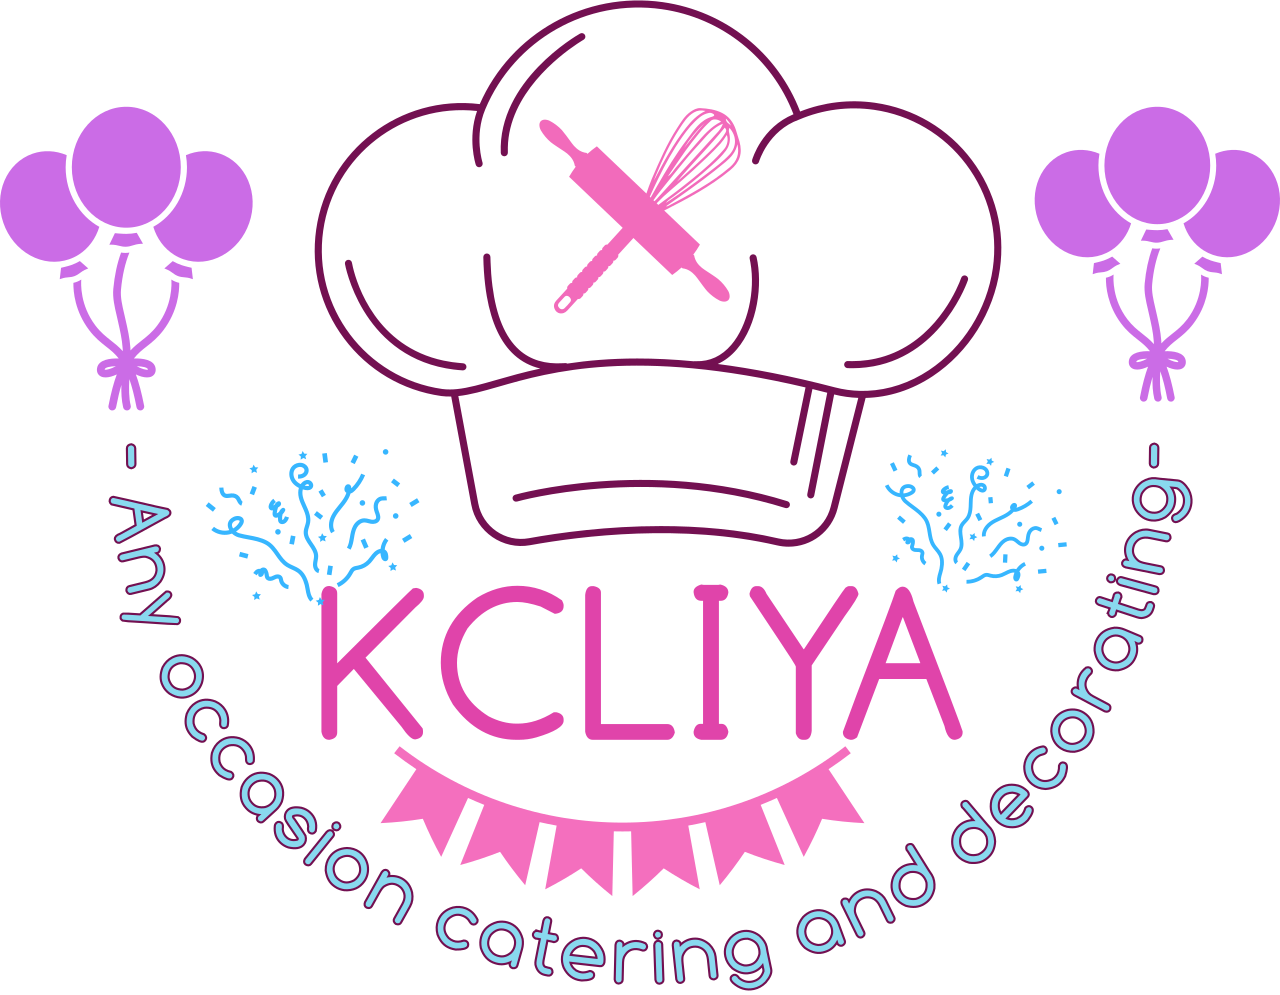 KCLIYA's web page